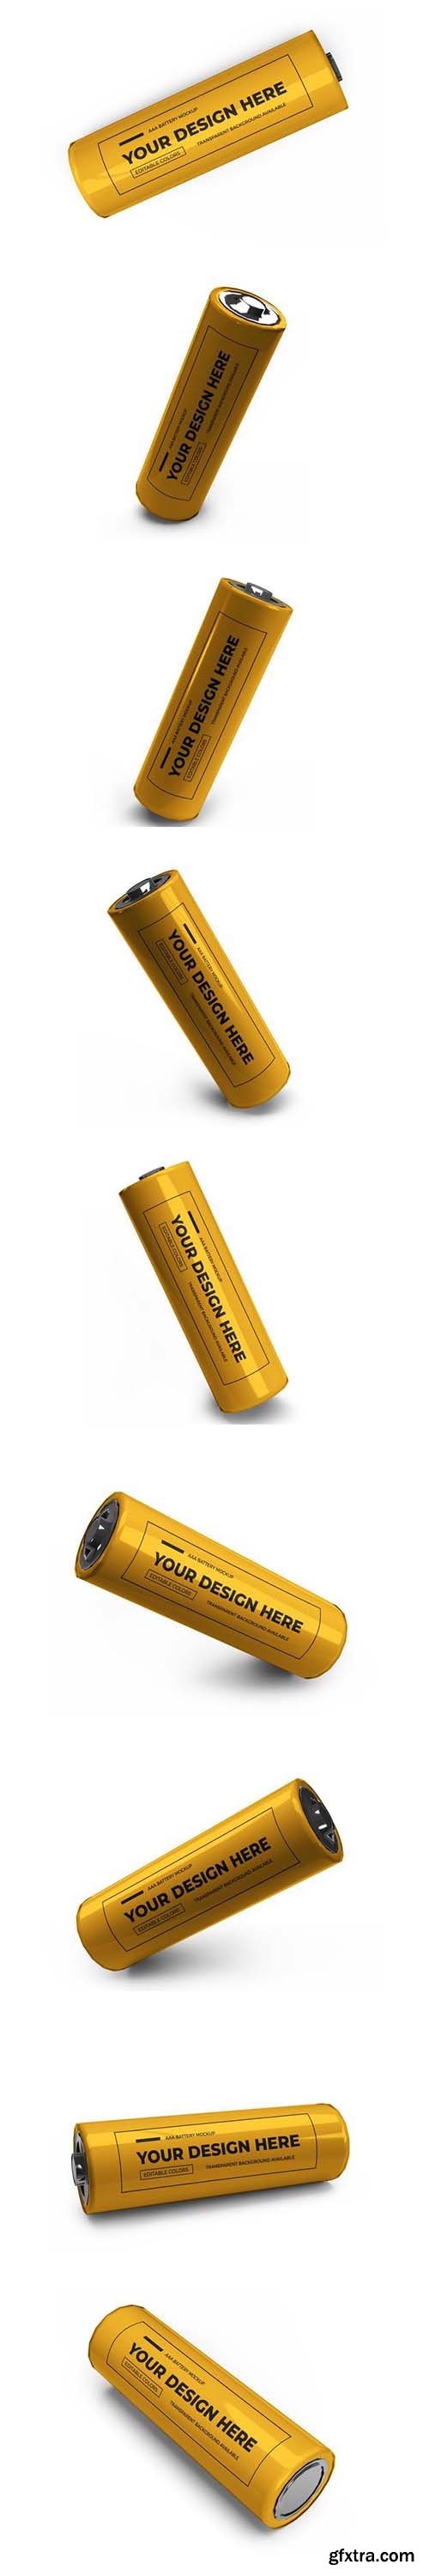 Small battery mockup